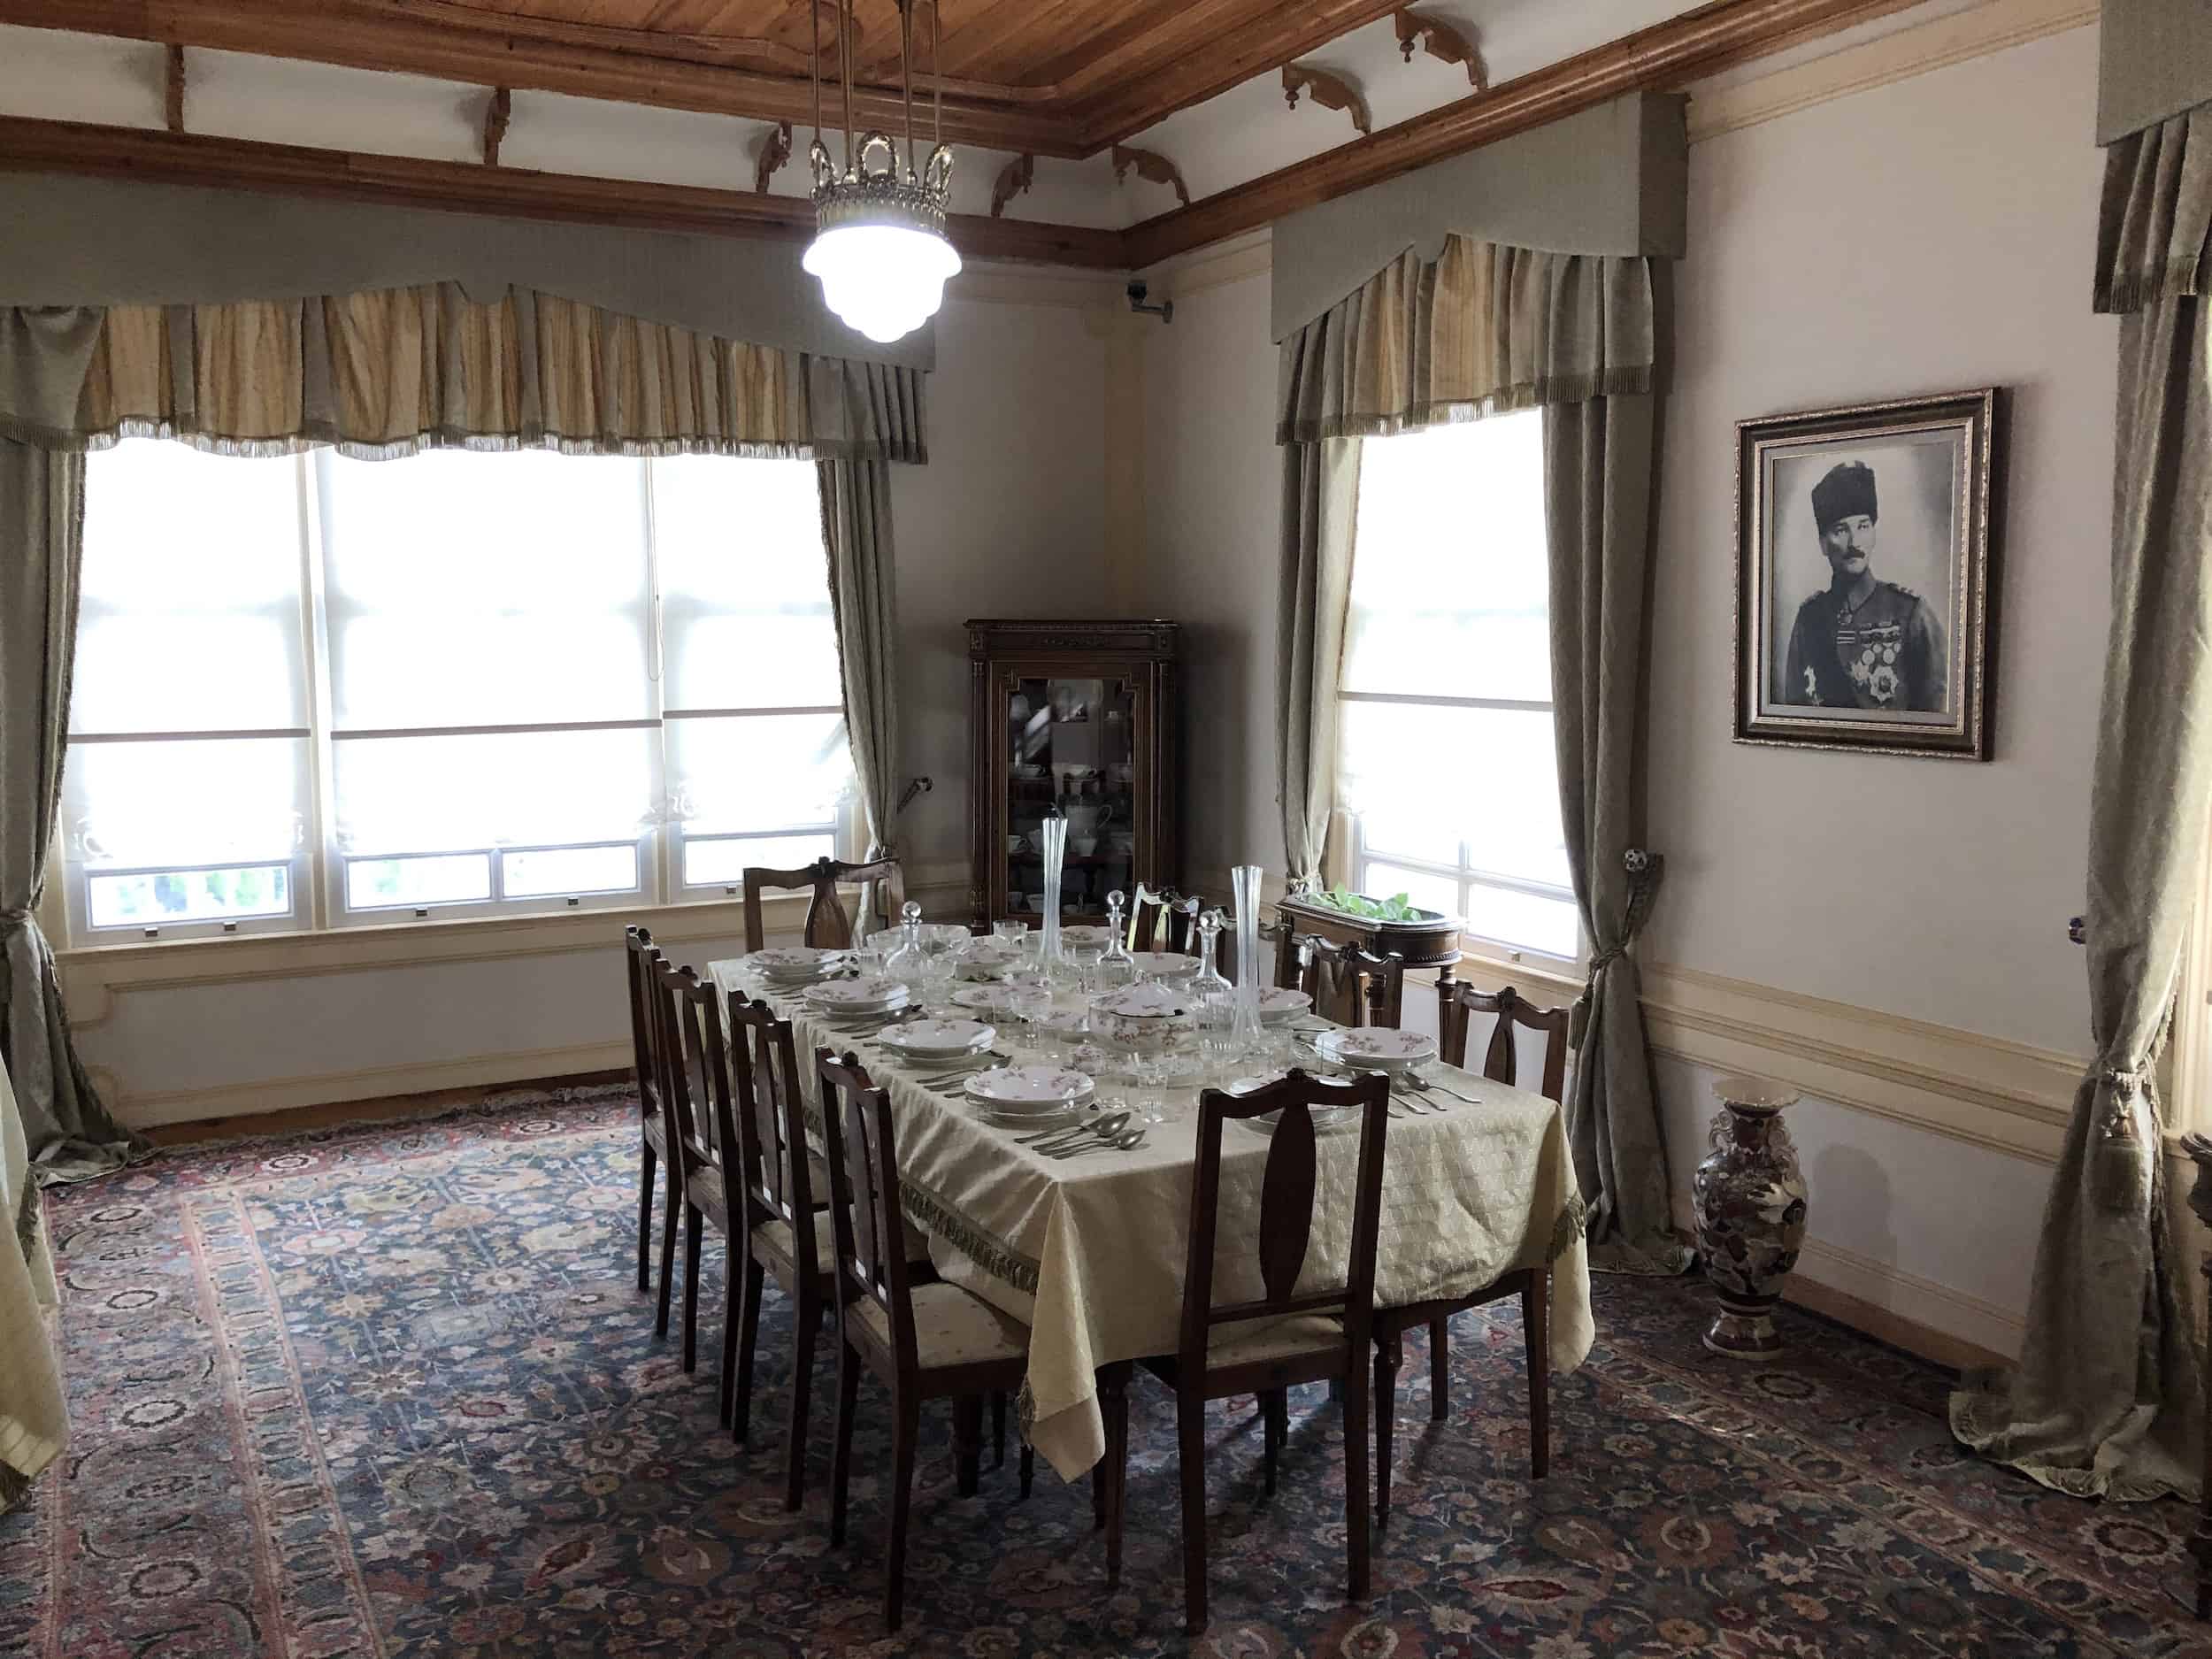 Dining room at the Bursa Atatürk House Museum in Bursa, Turkey